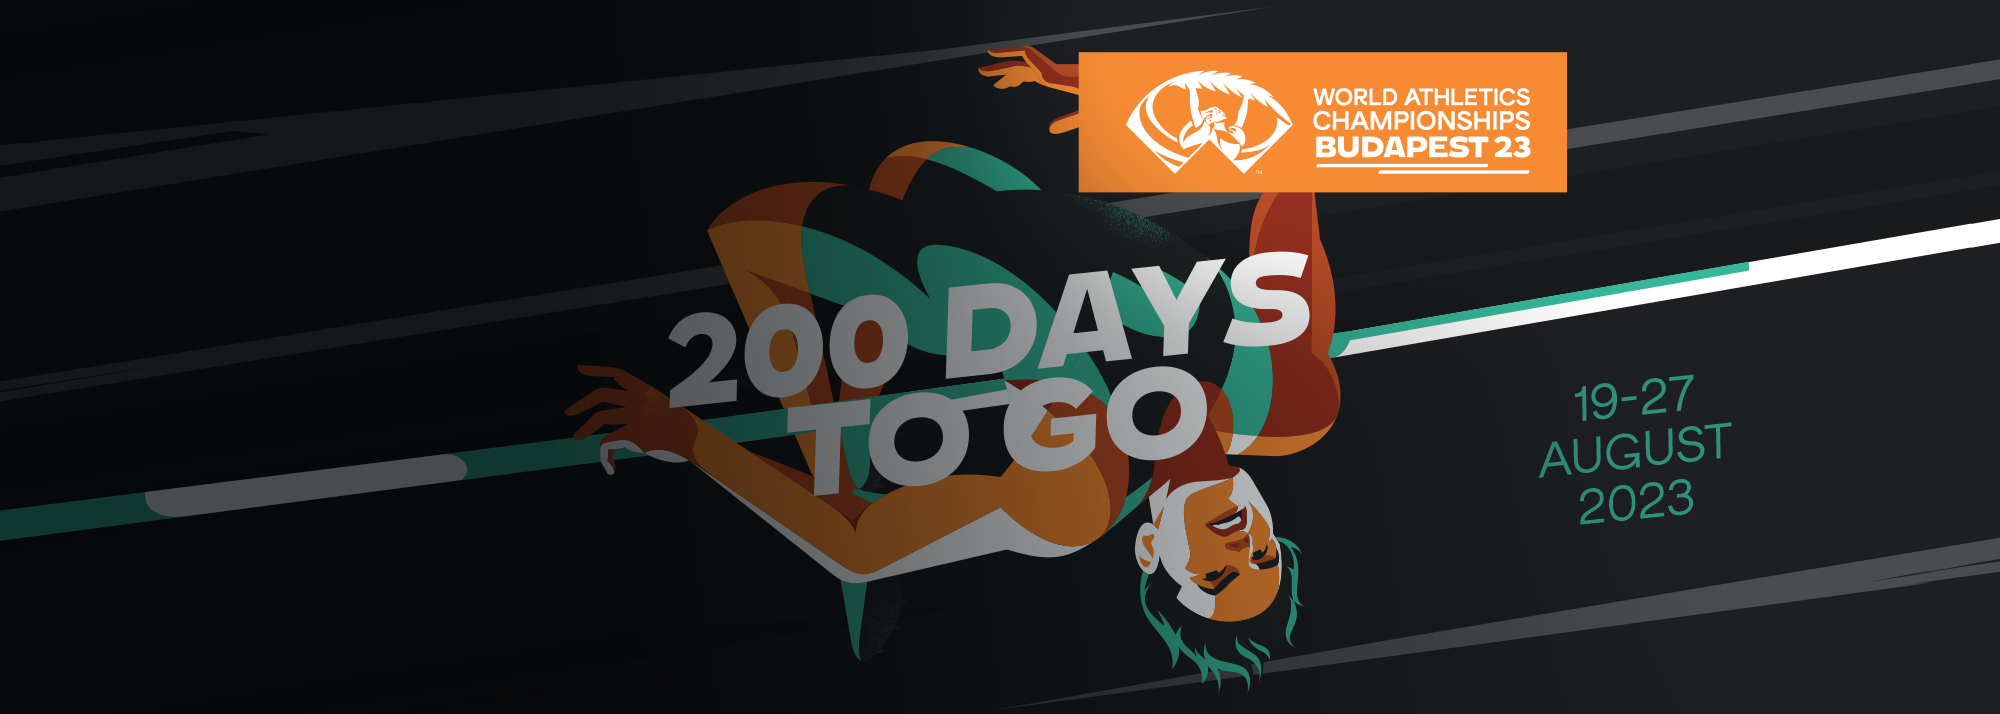 Budapest hits 200 daystogo mark for 2023 World Athletics Championships